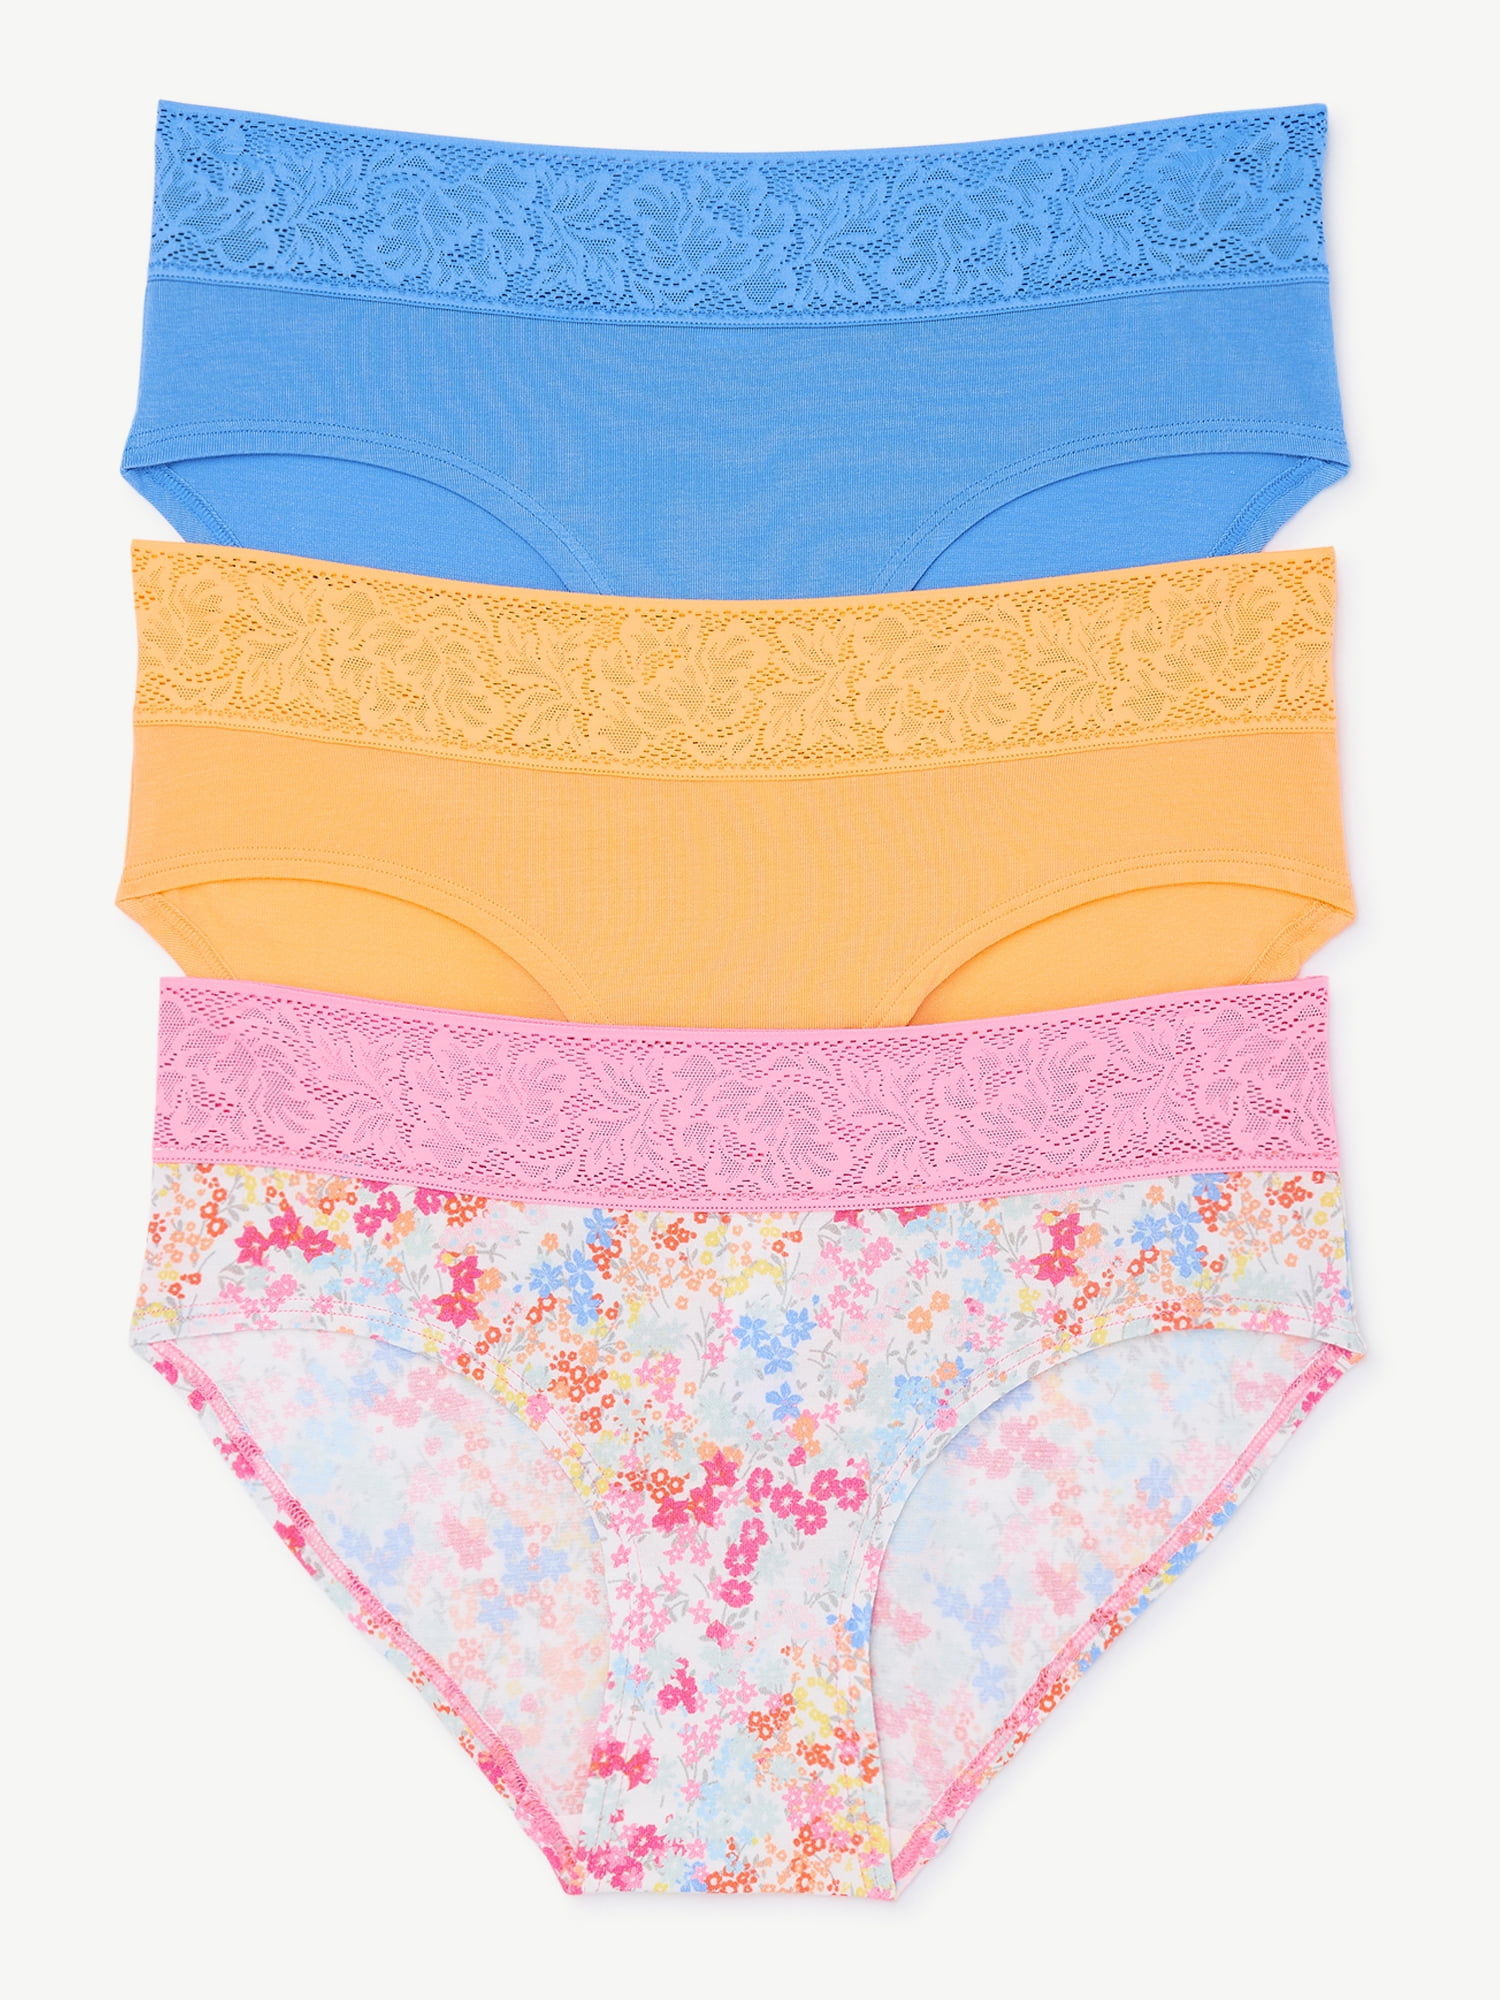 Joyspun Women's Modal and Lace Hipster Panties, 3-Pack, Sizes S